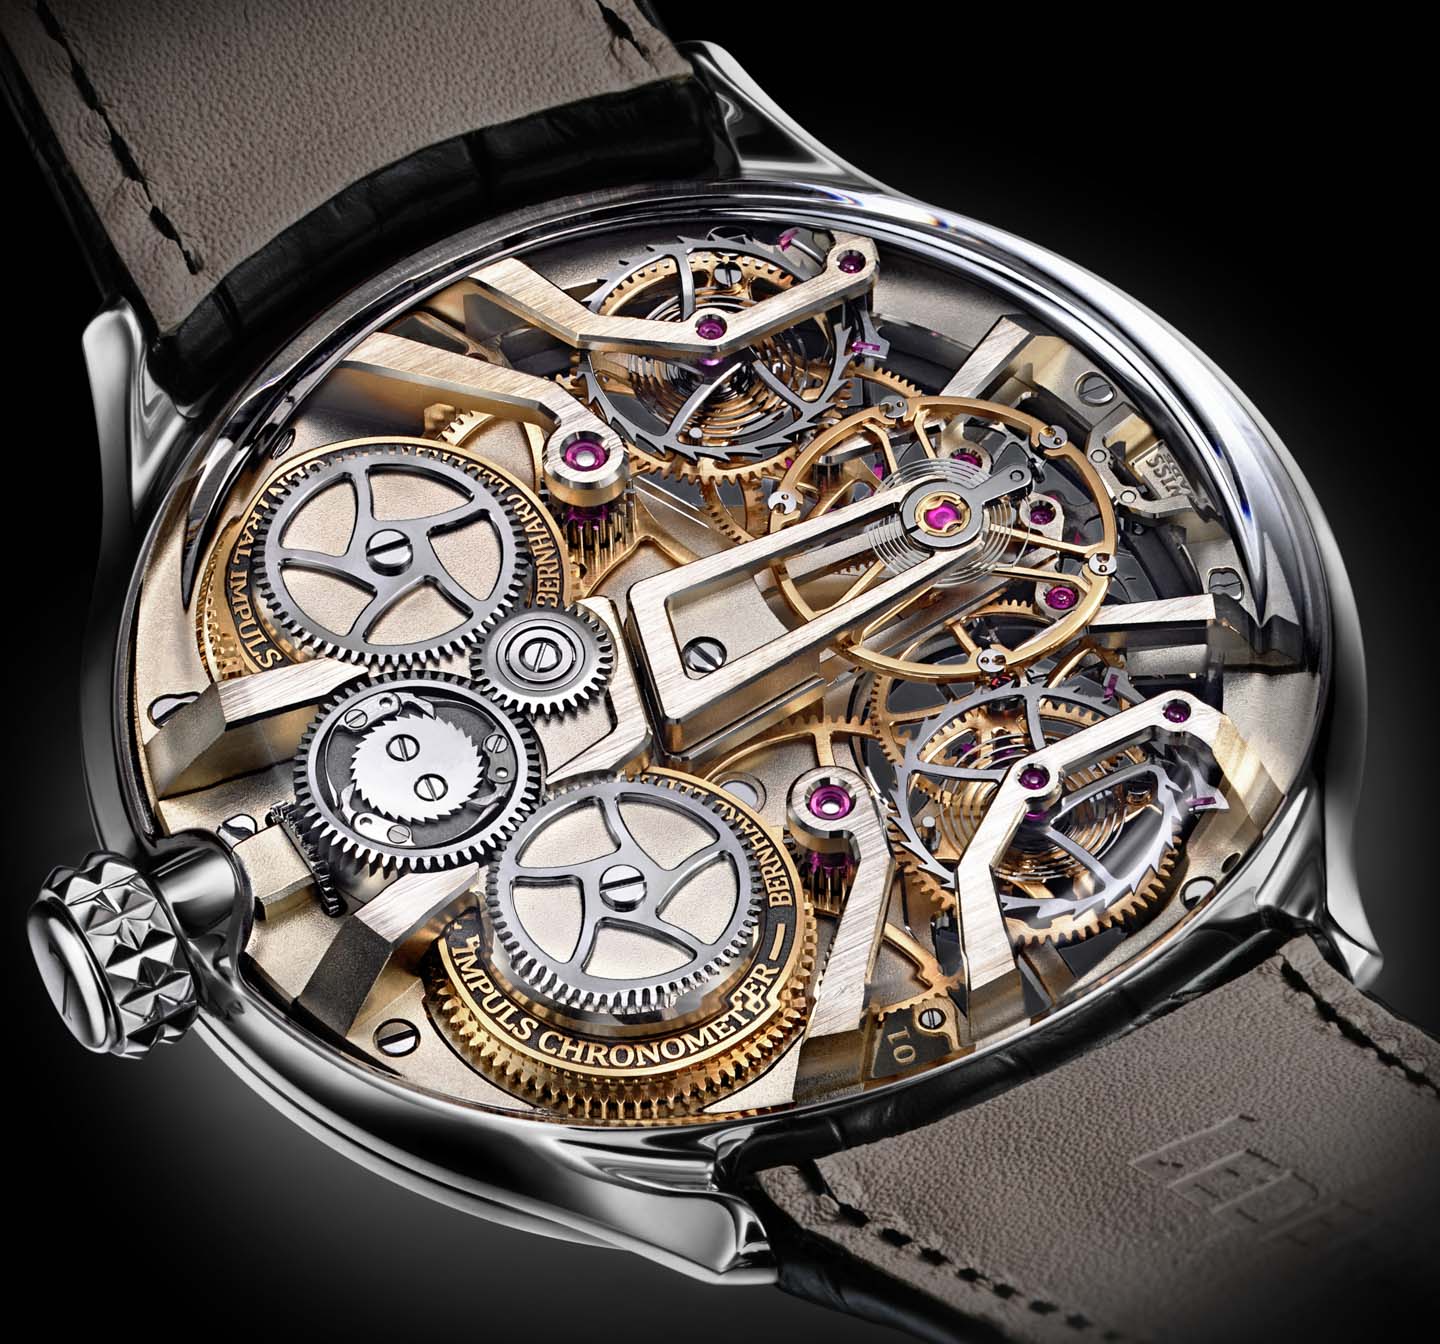 Bernhard Lederer Central Impulse Chronometer Watch Is A Gentleman’s Pursuit Of Precision